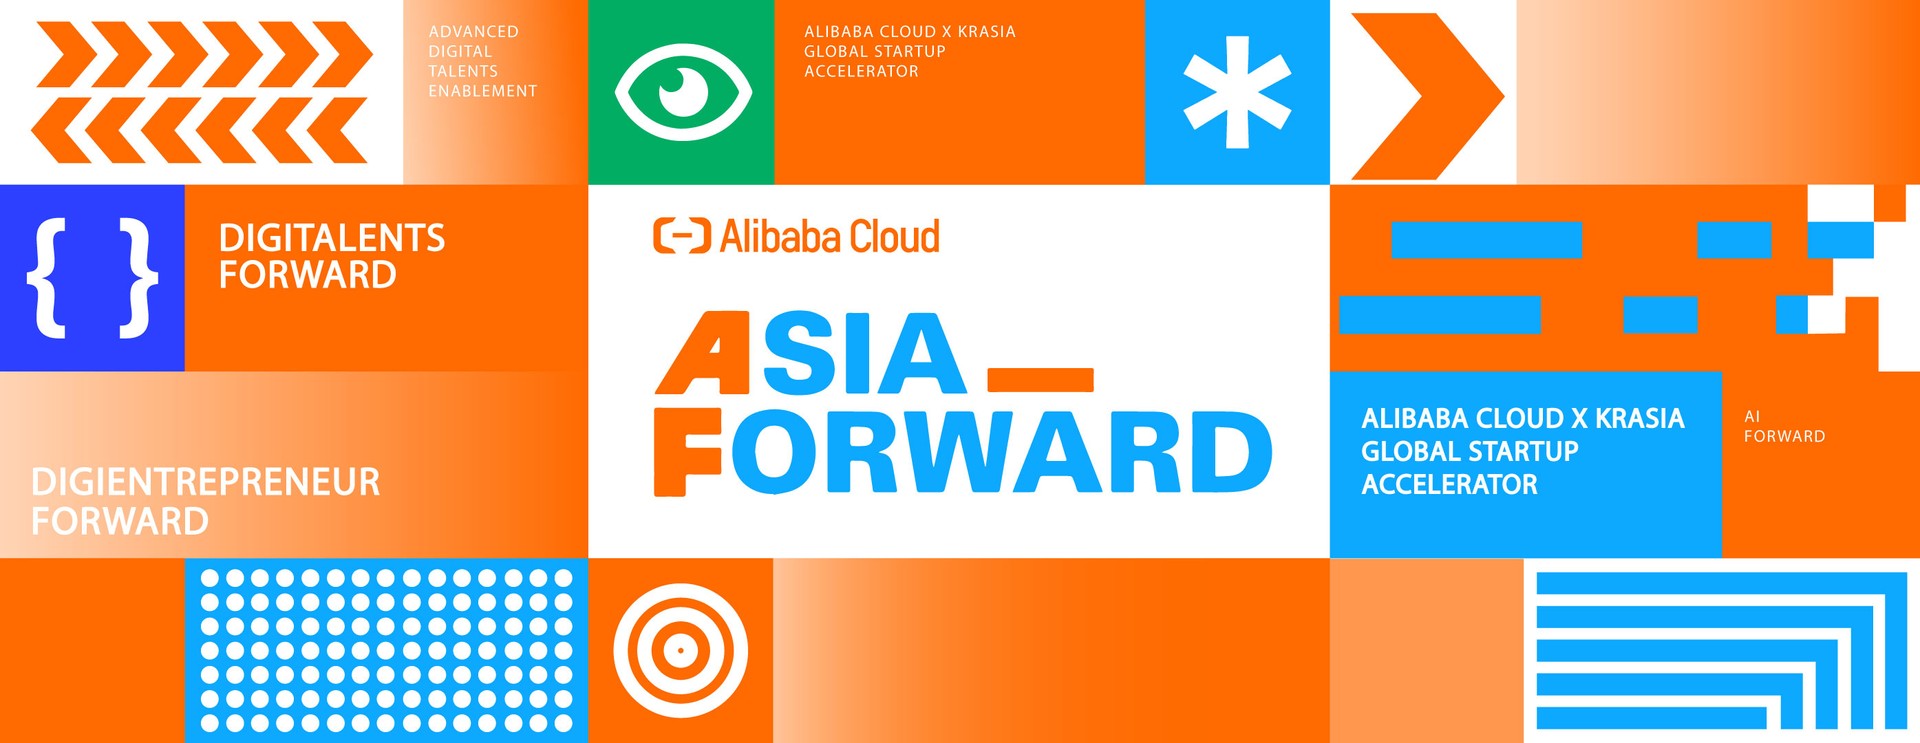 Cloud Alibaba - Asia Forward